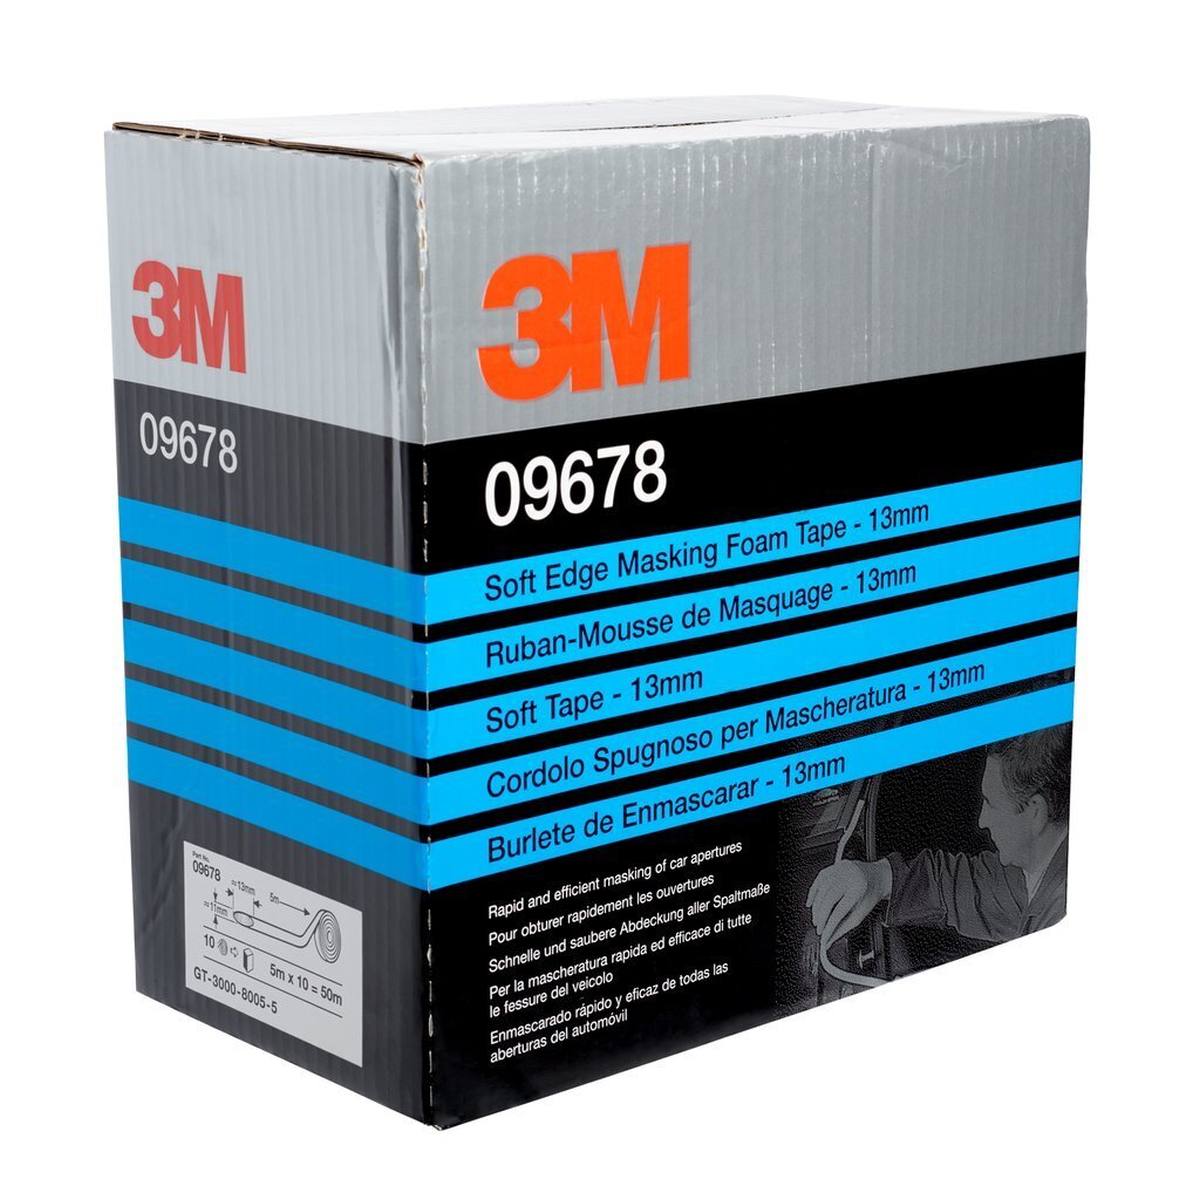 3M Soft Edge Foam masking tape, white, 50 m x 13 mm, 1pack=3pcs #09678